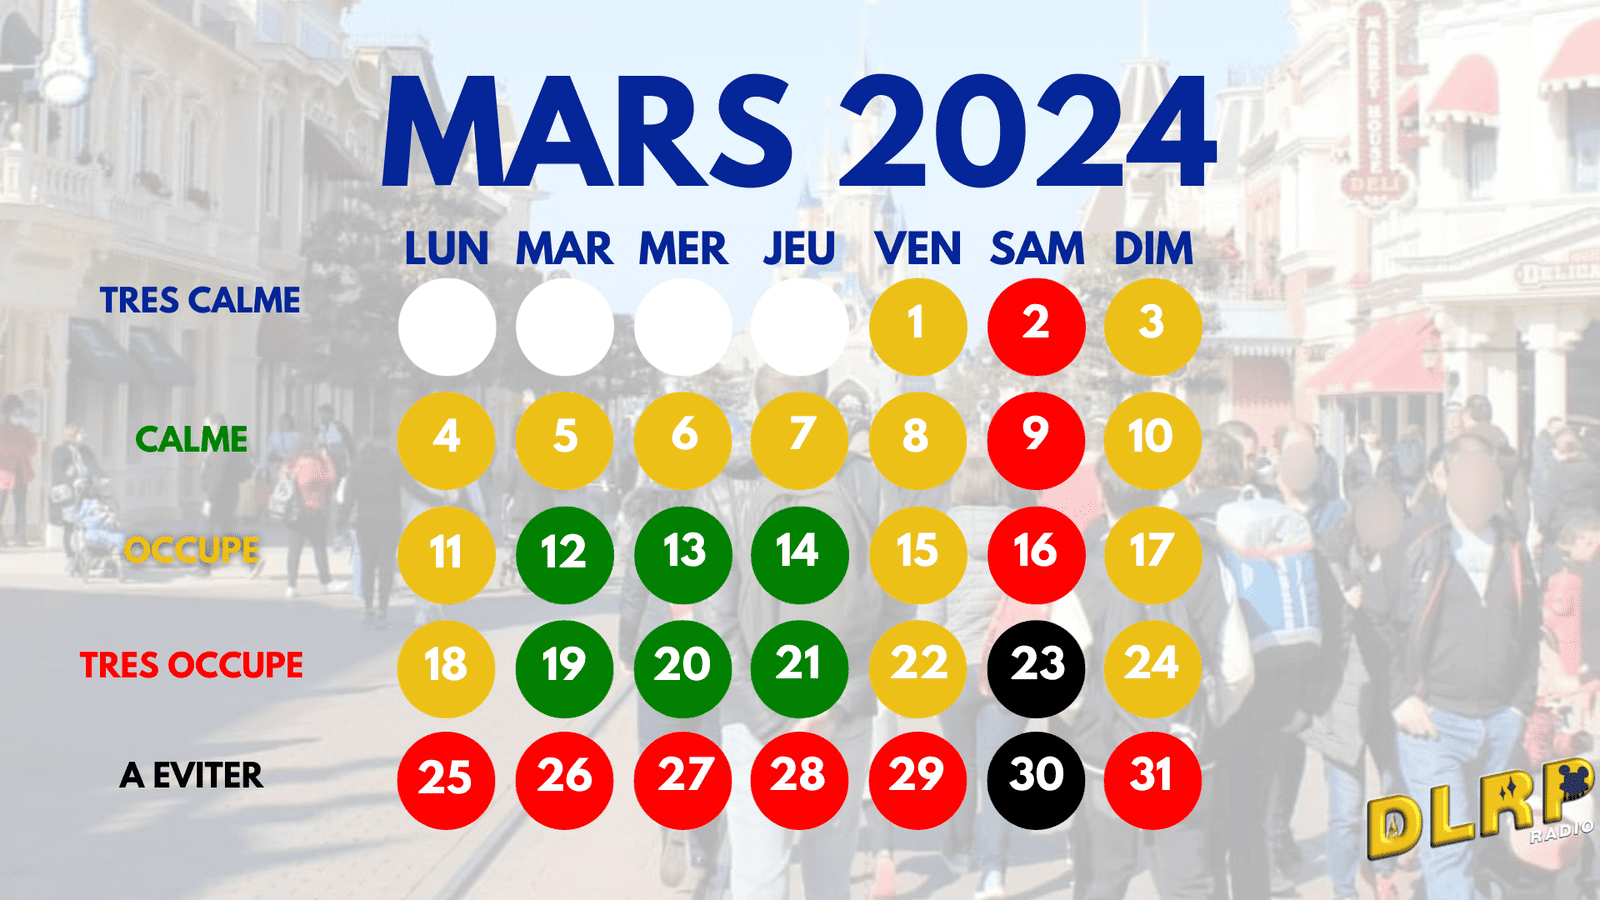 Calendrier d'affluence 2024 - 2025 à Disneyland Paris